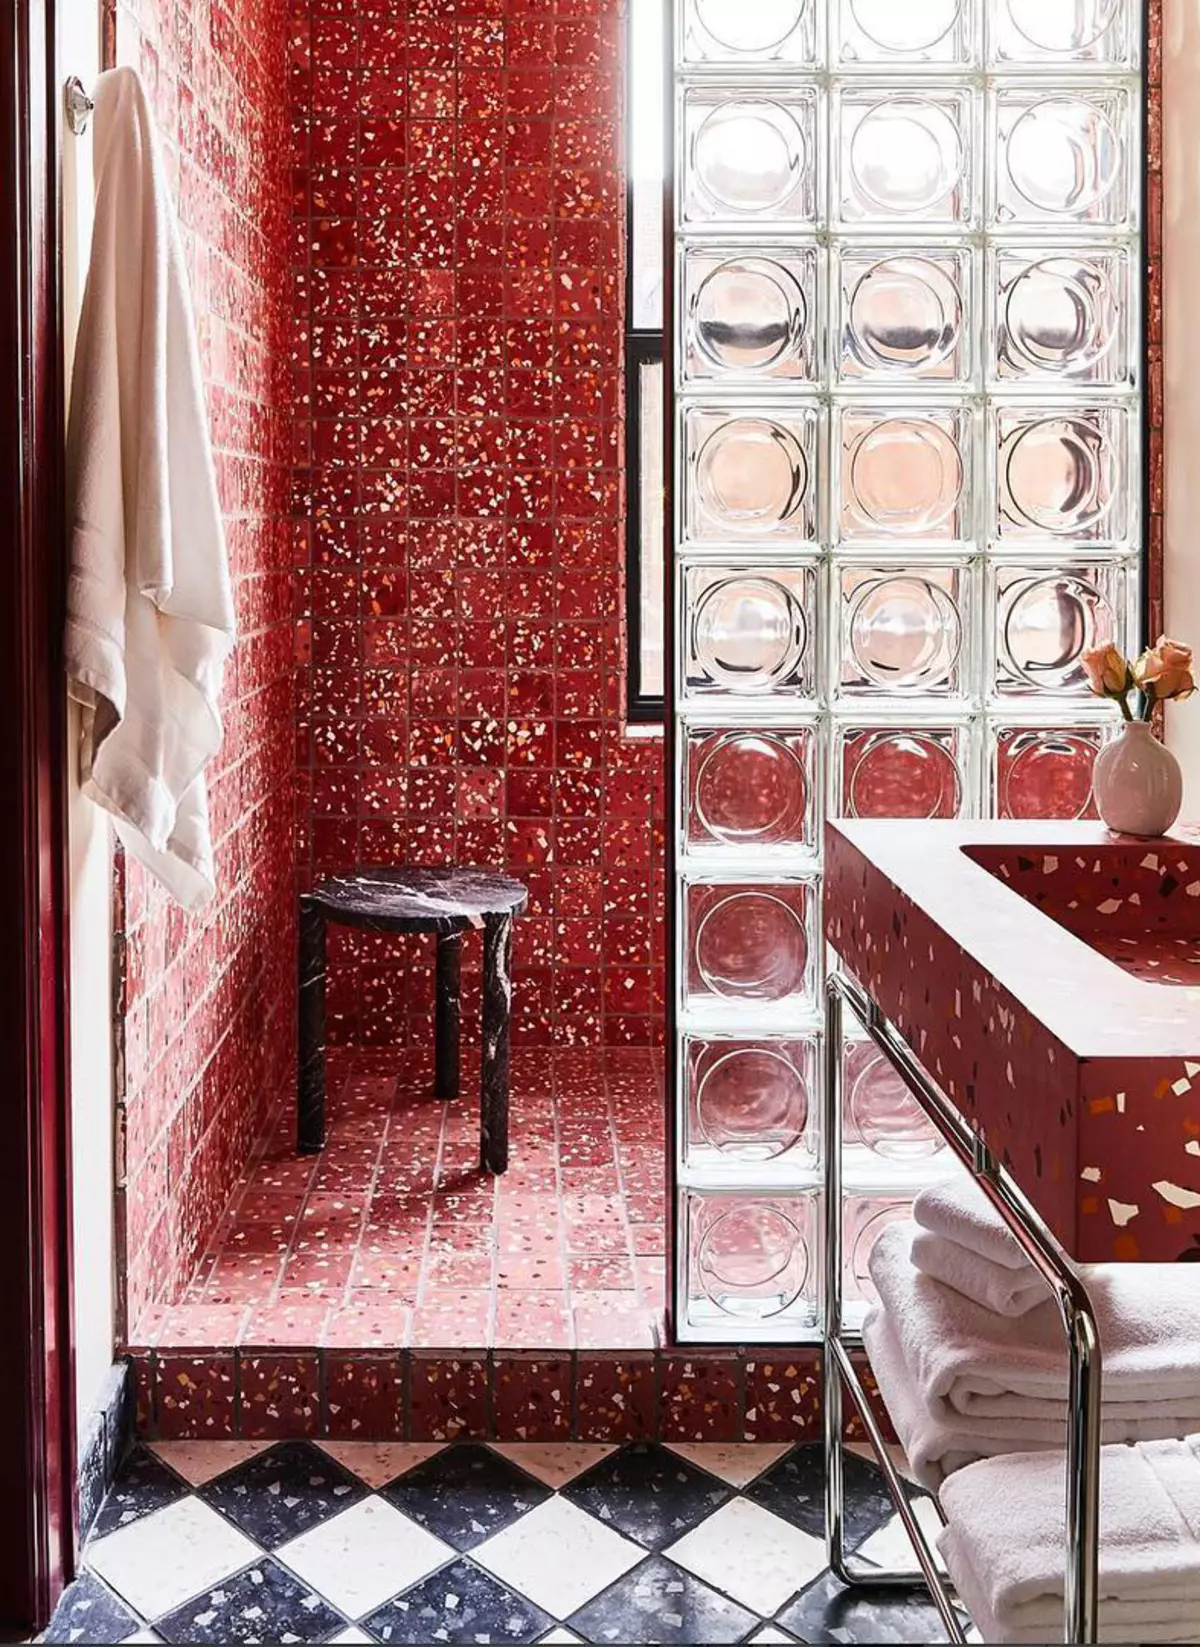 Bright stylish red bathroom interior